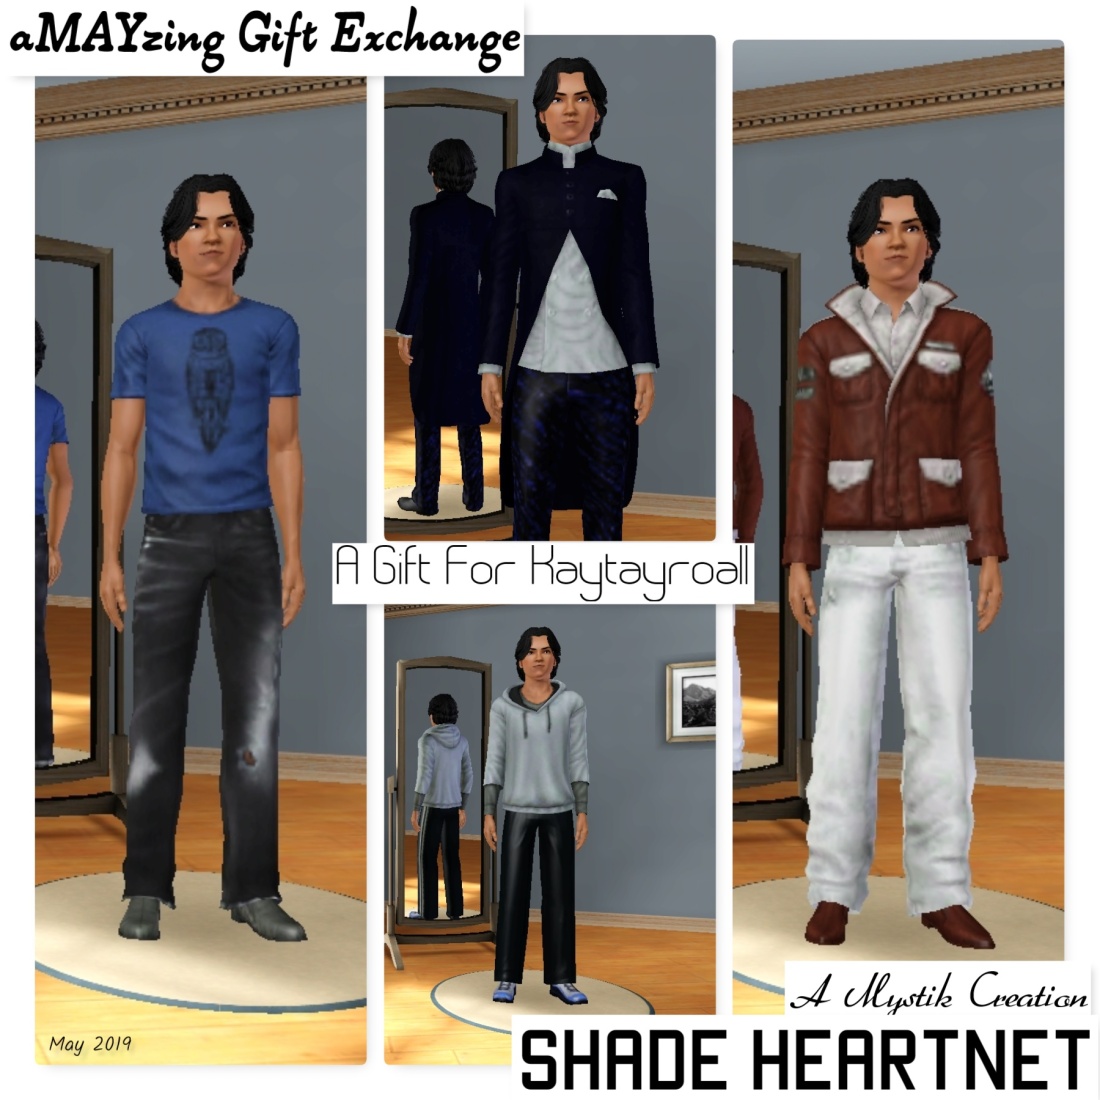 shade-heartnet-sims-3-amayzing-gift-exchange-gift.jpg?w=1100